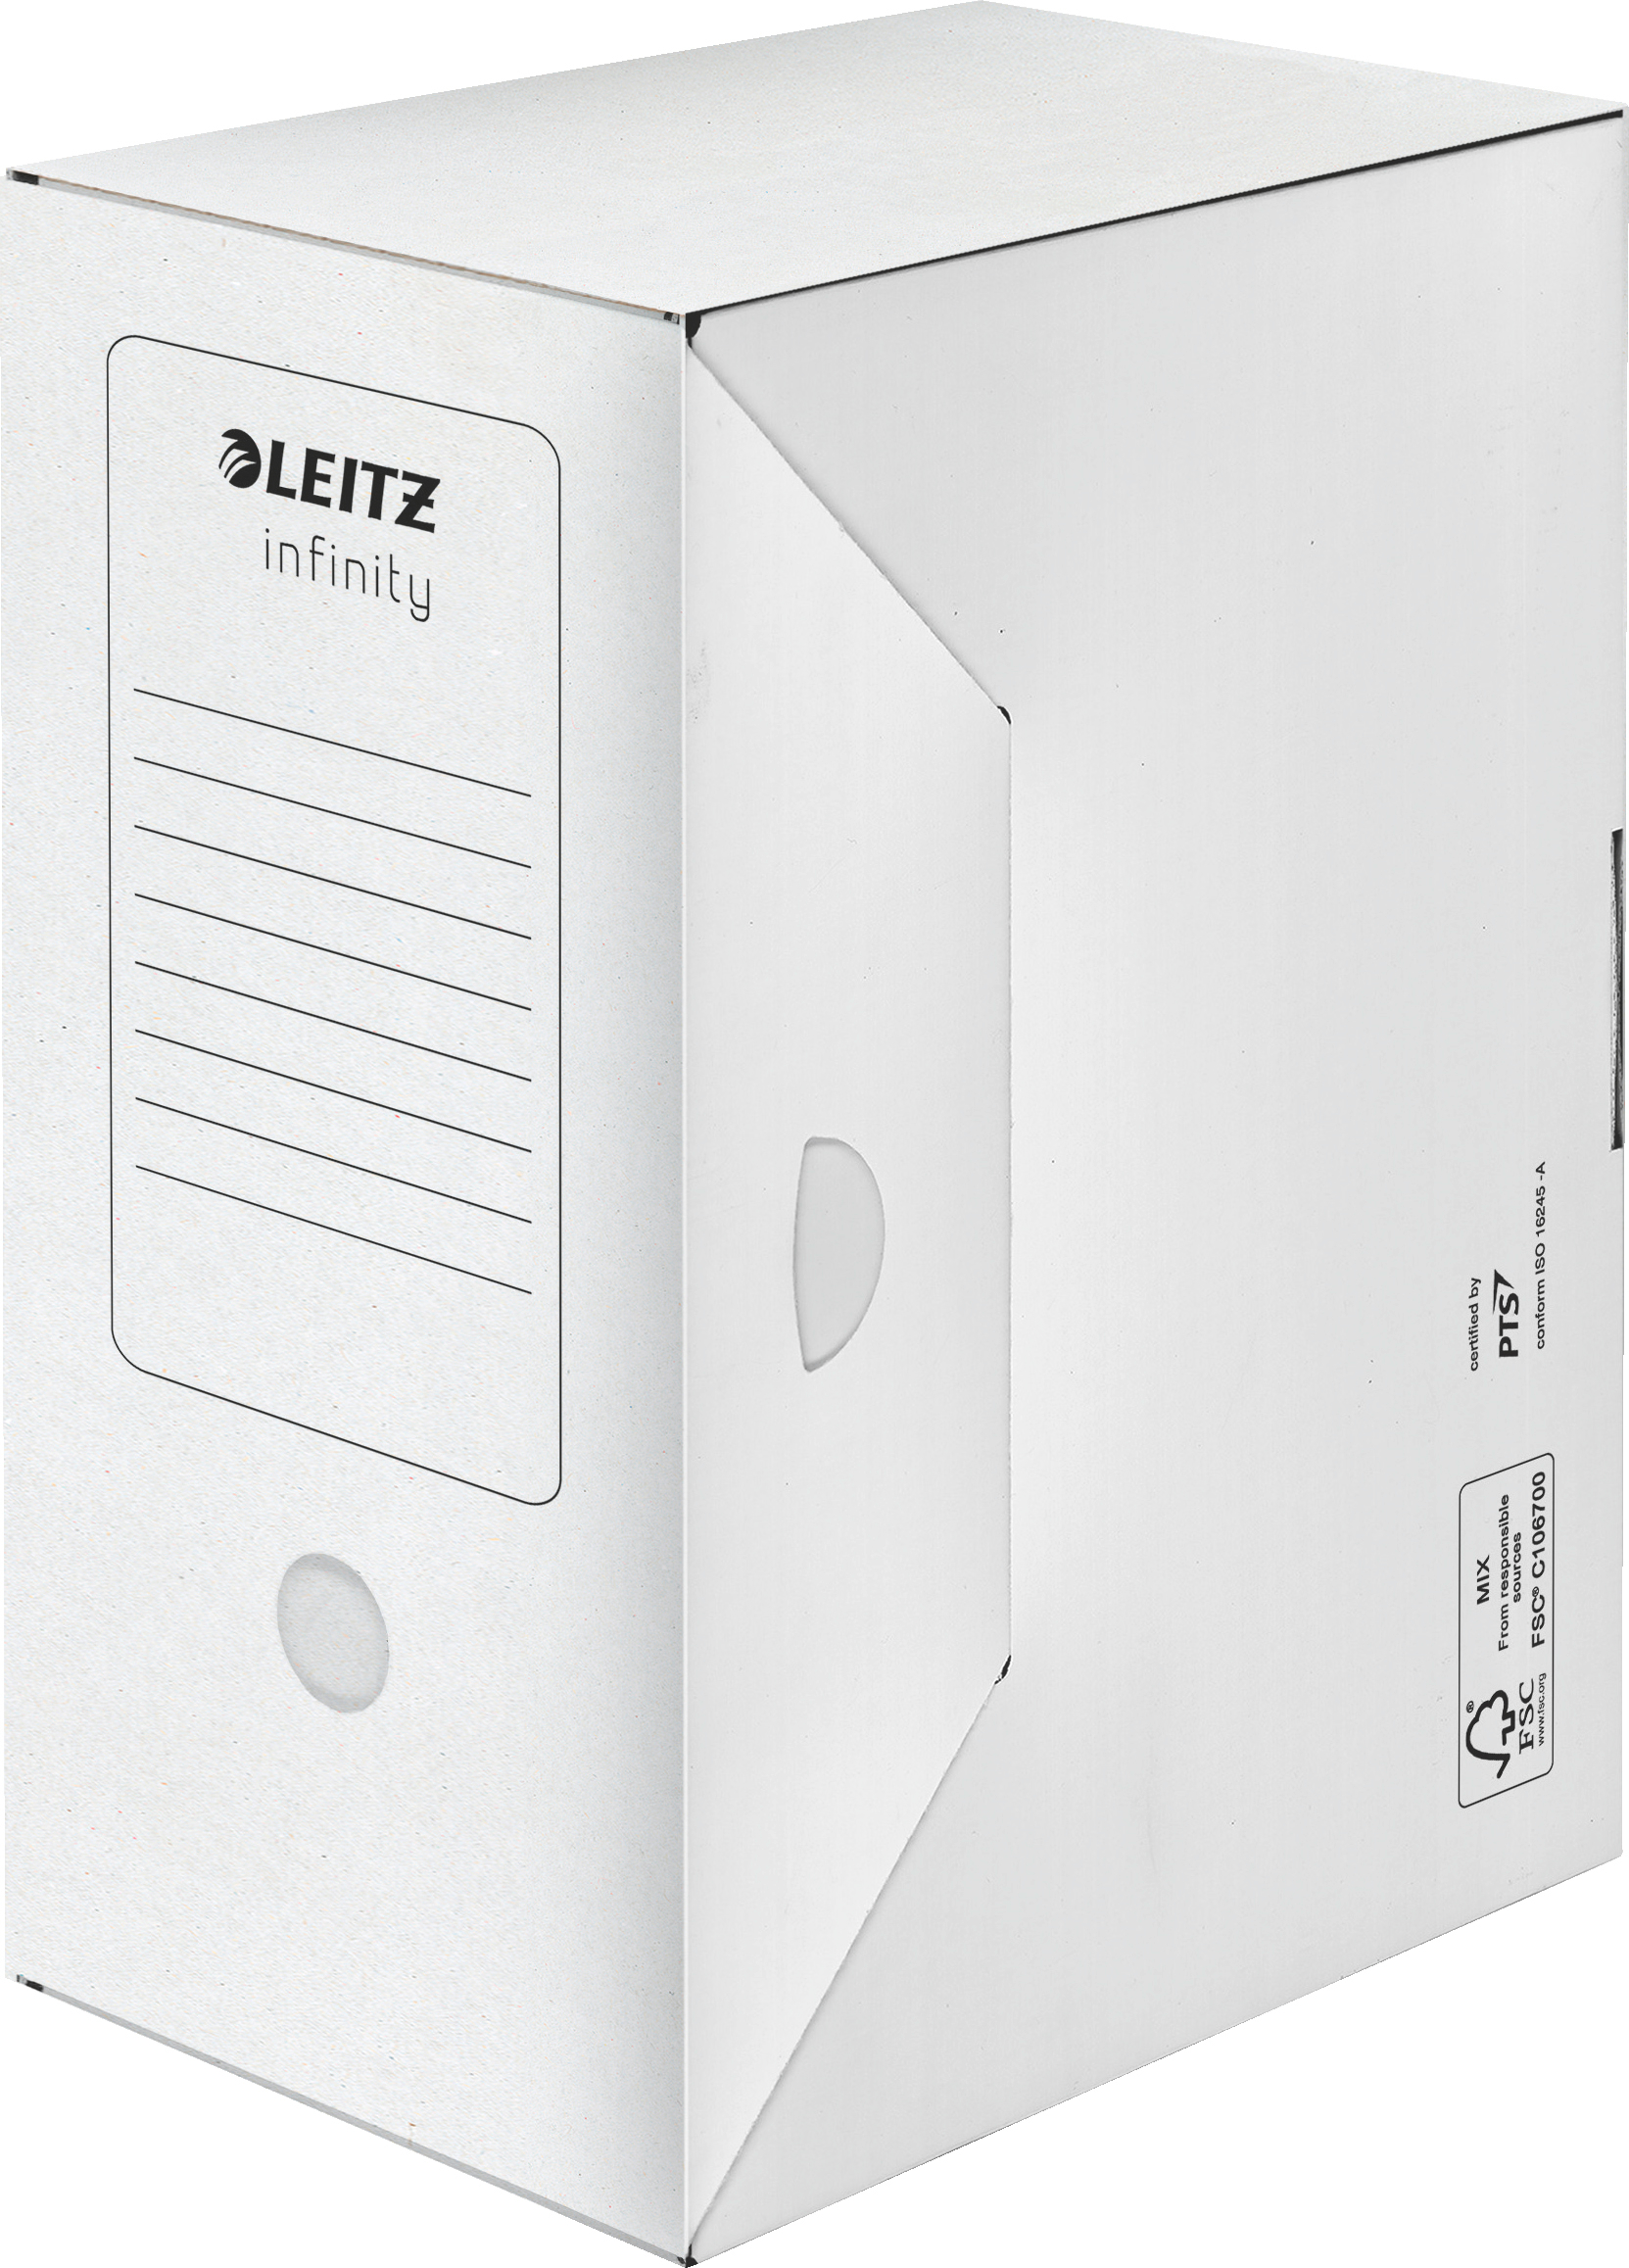 LEITZ Infinity Boîte d'archive 60920000 blanc 330x150x255mm